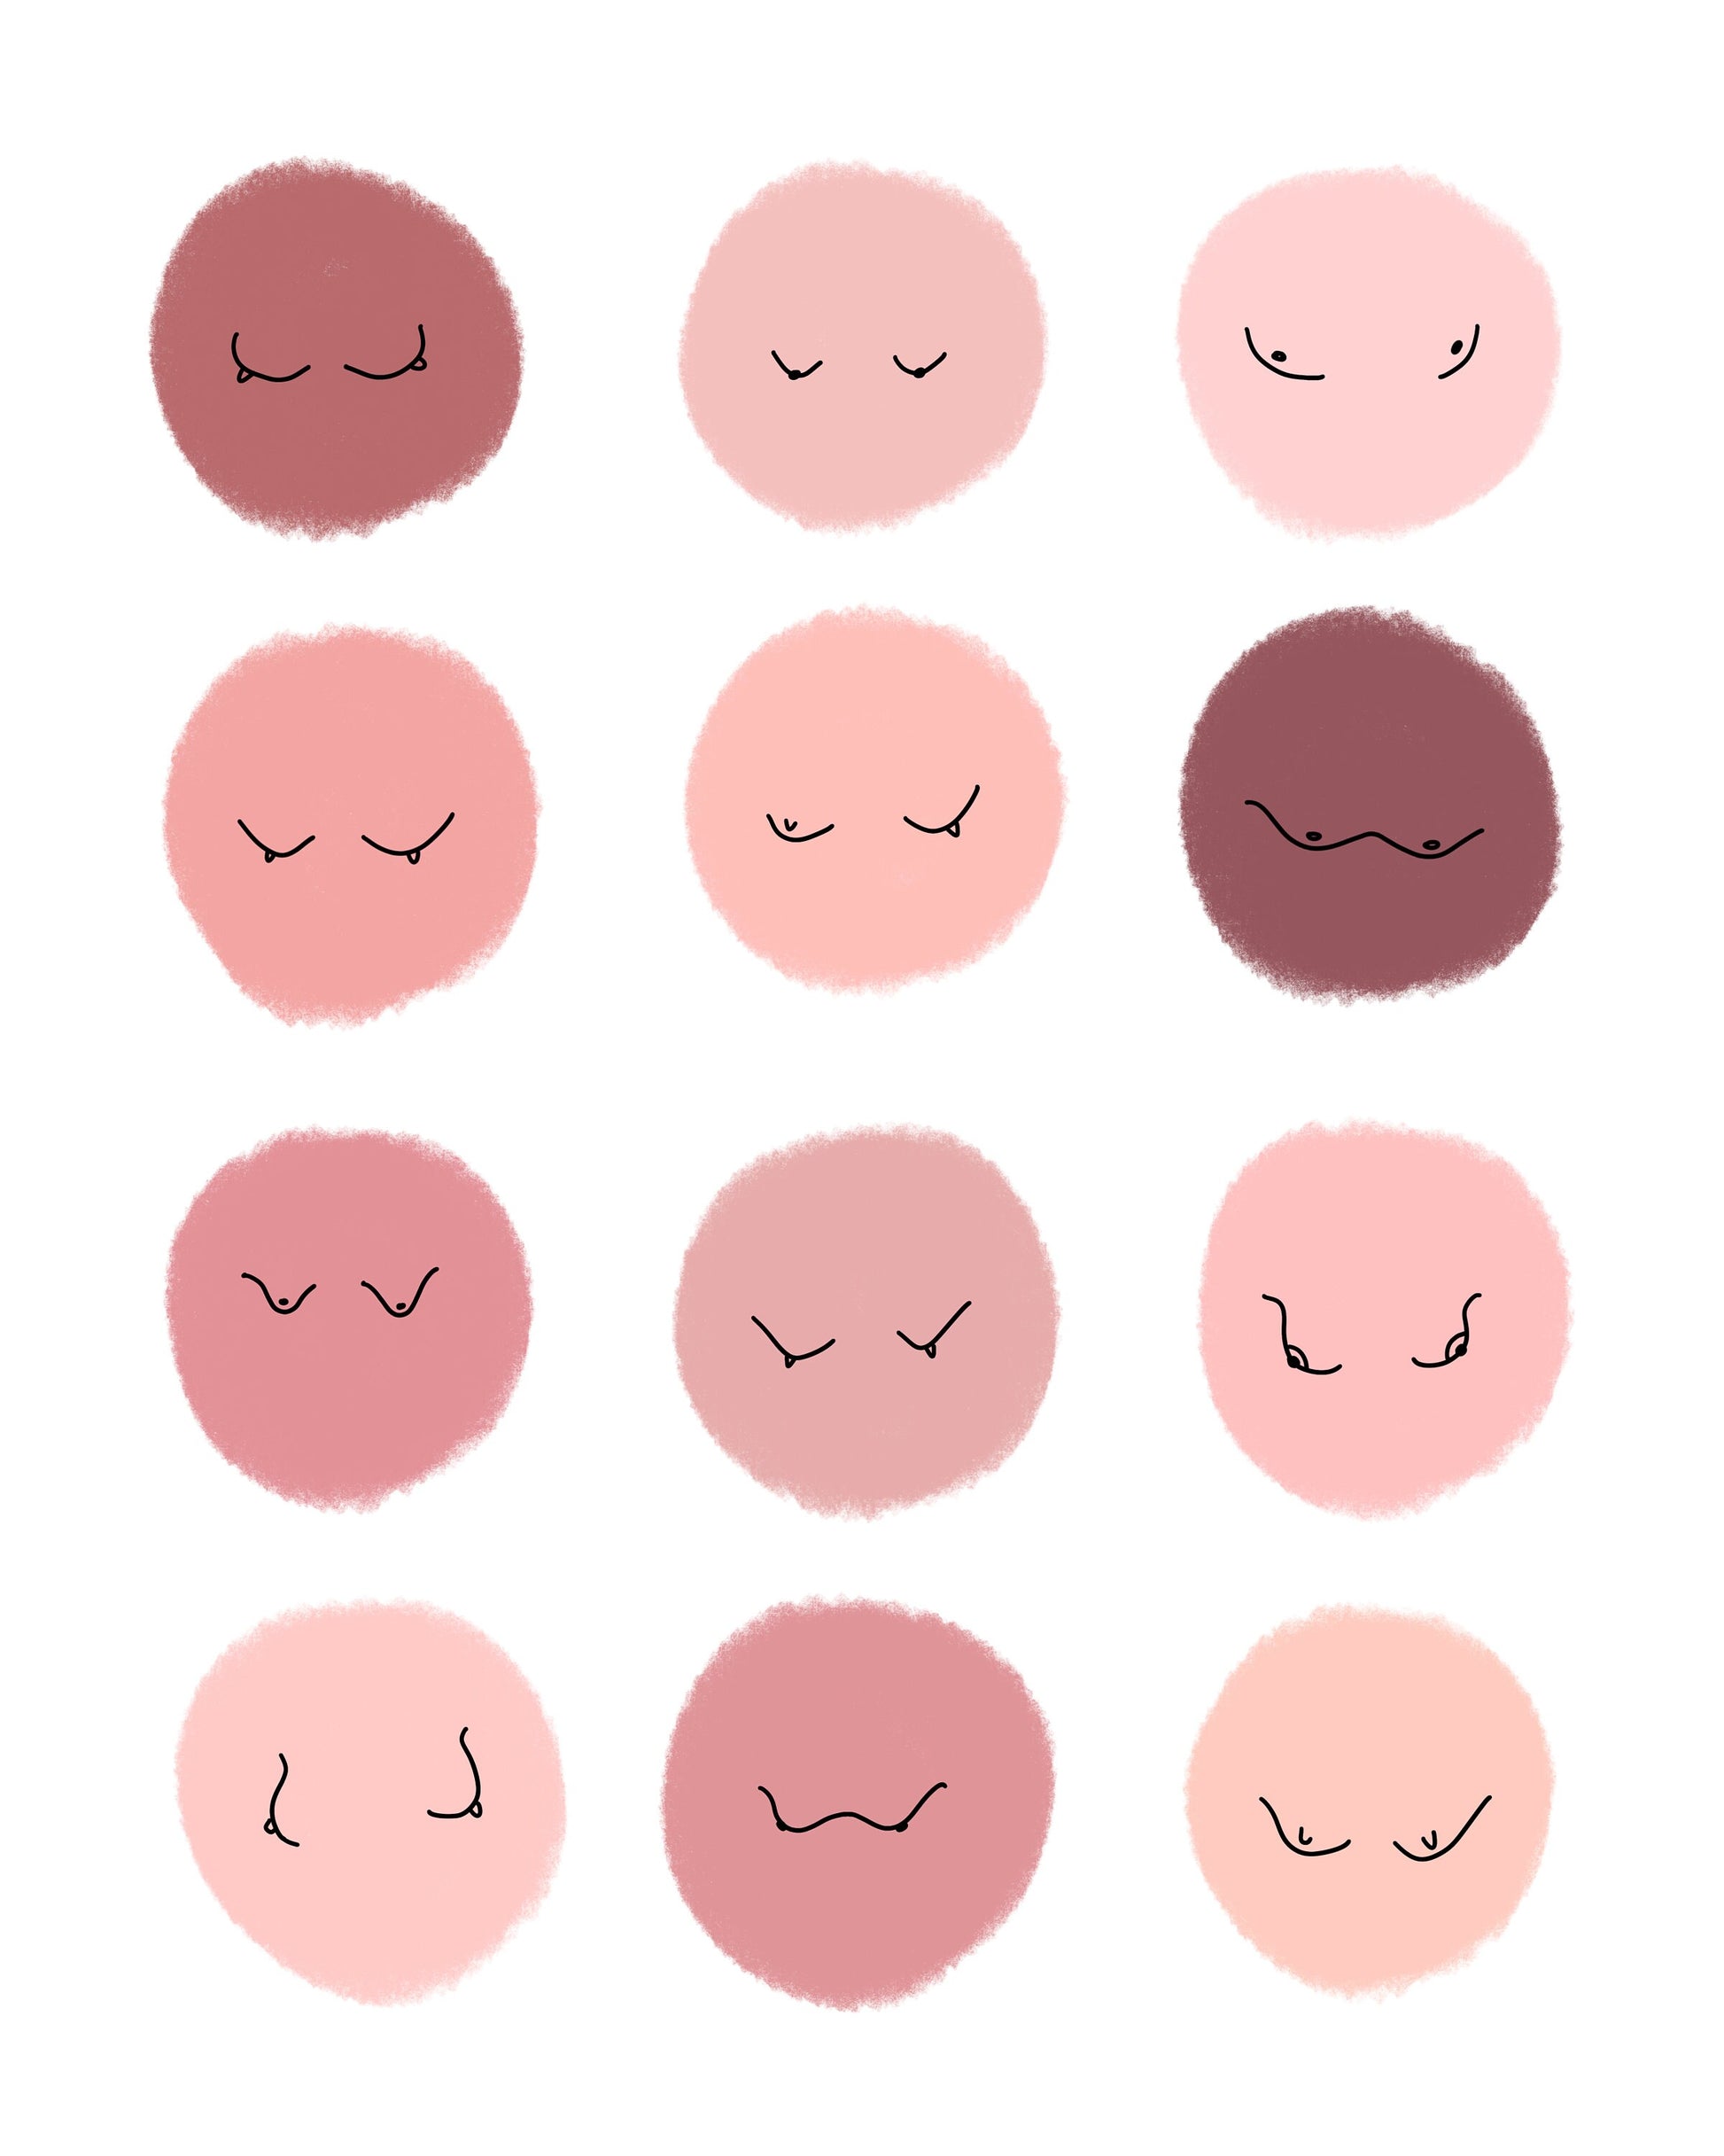 SMALL BOOBIES pink | Print 8x10 - Unframed